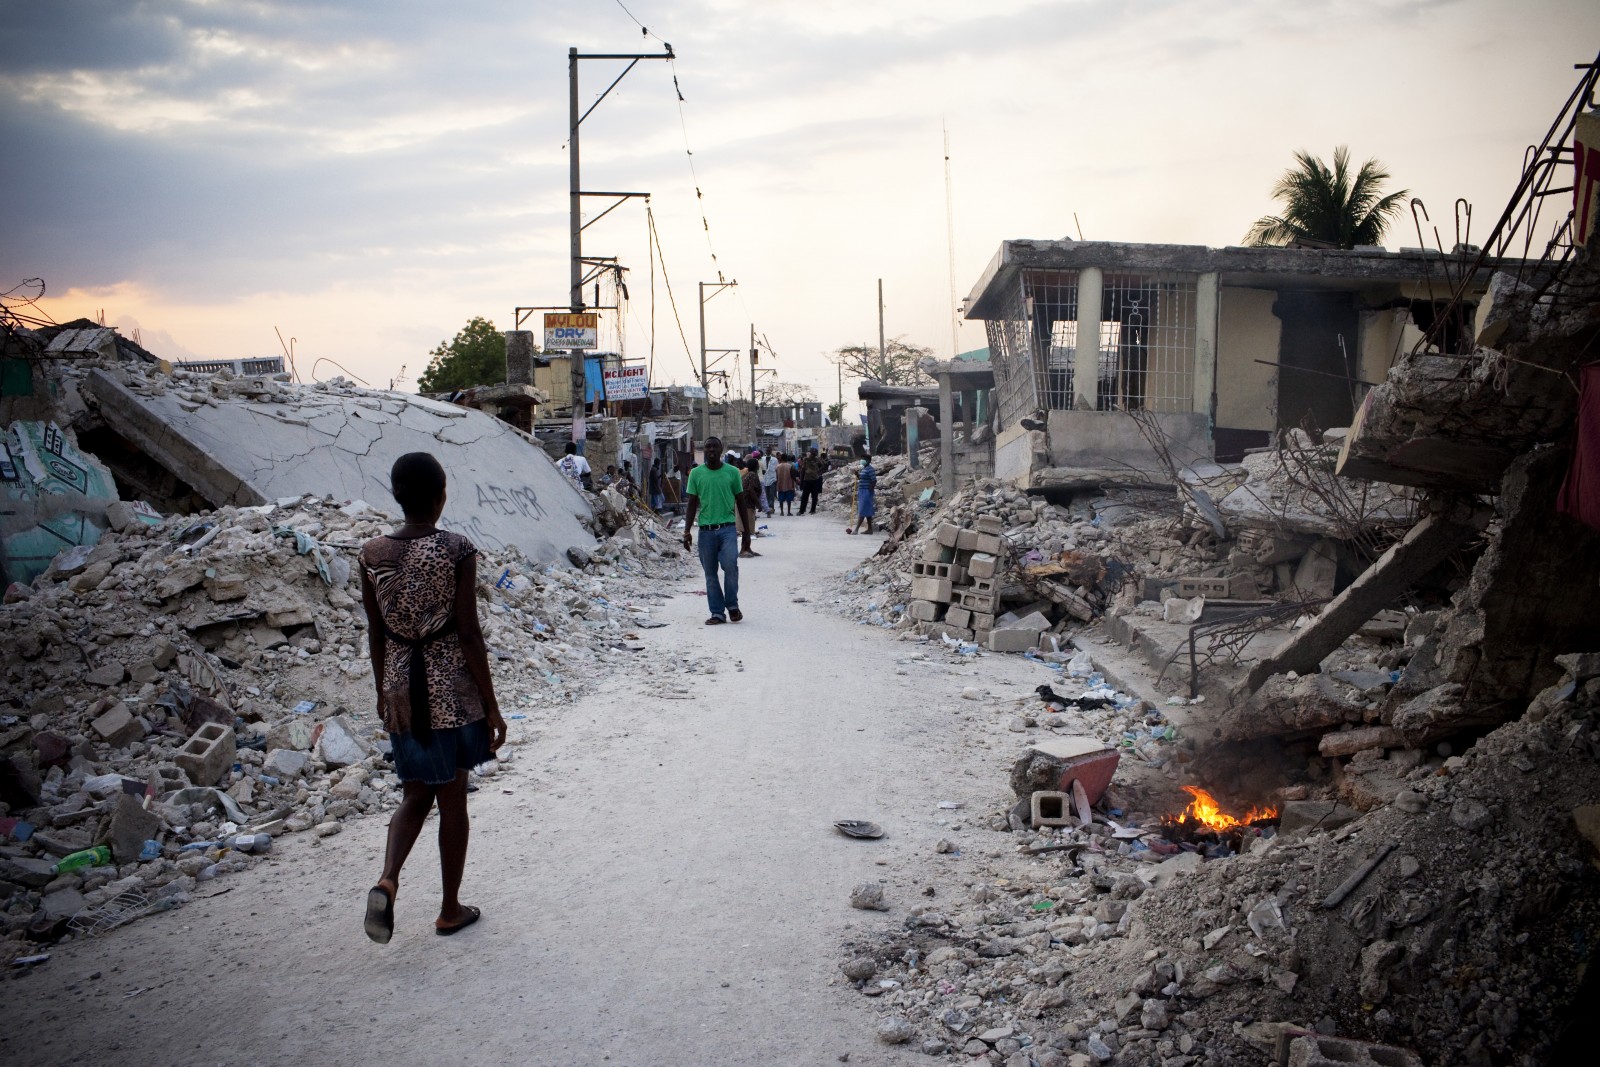 aardbeving Haïti